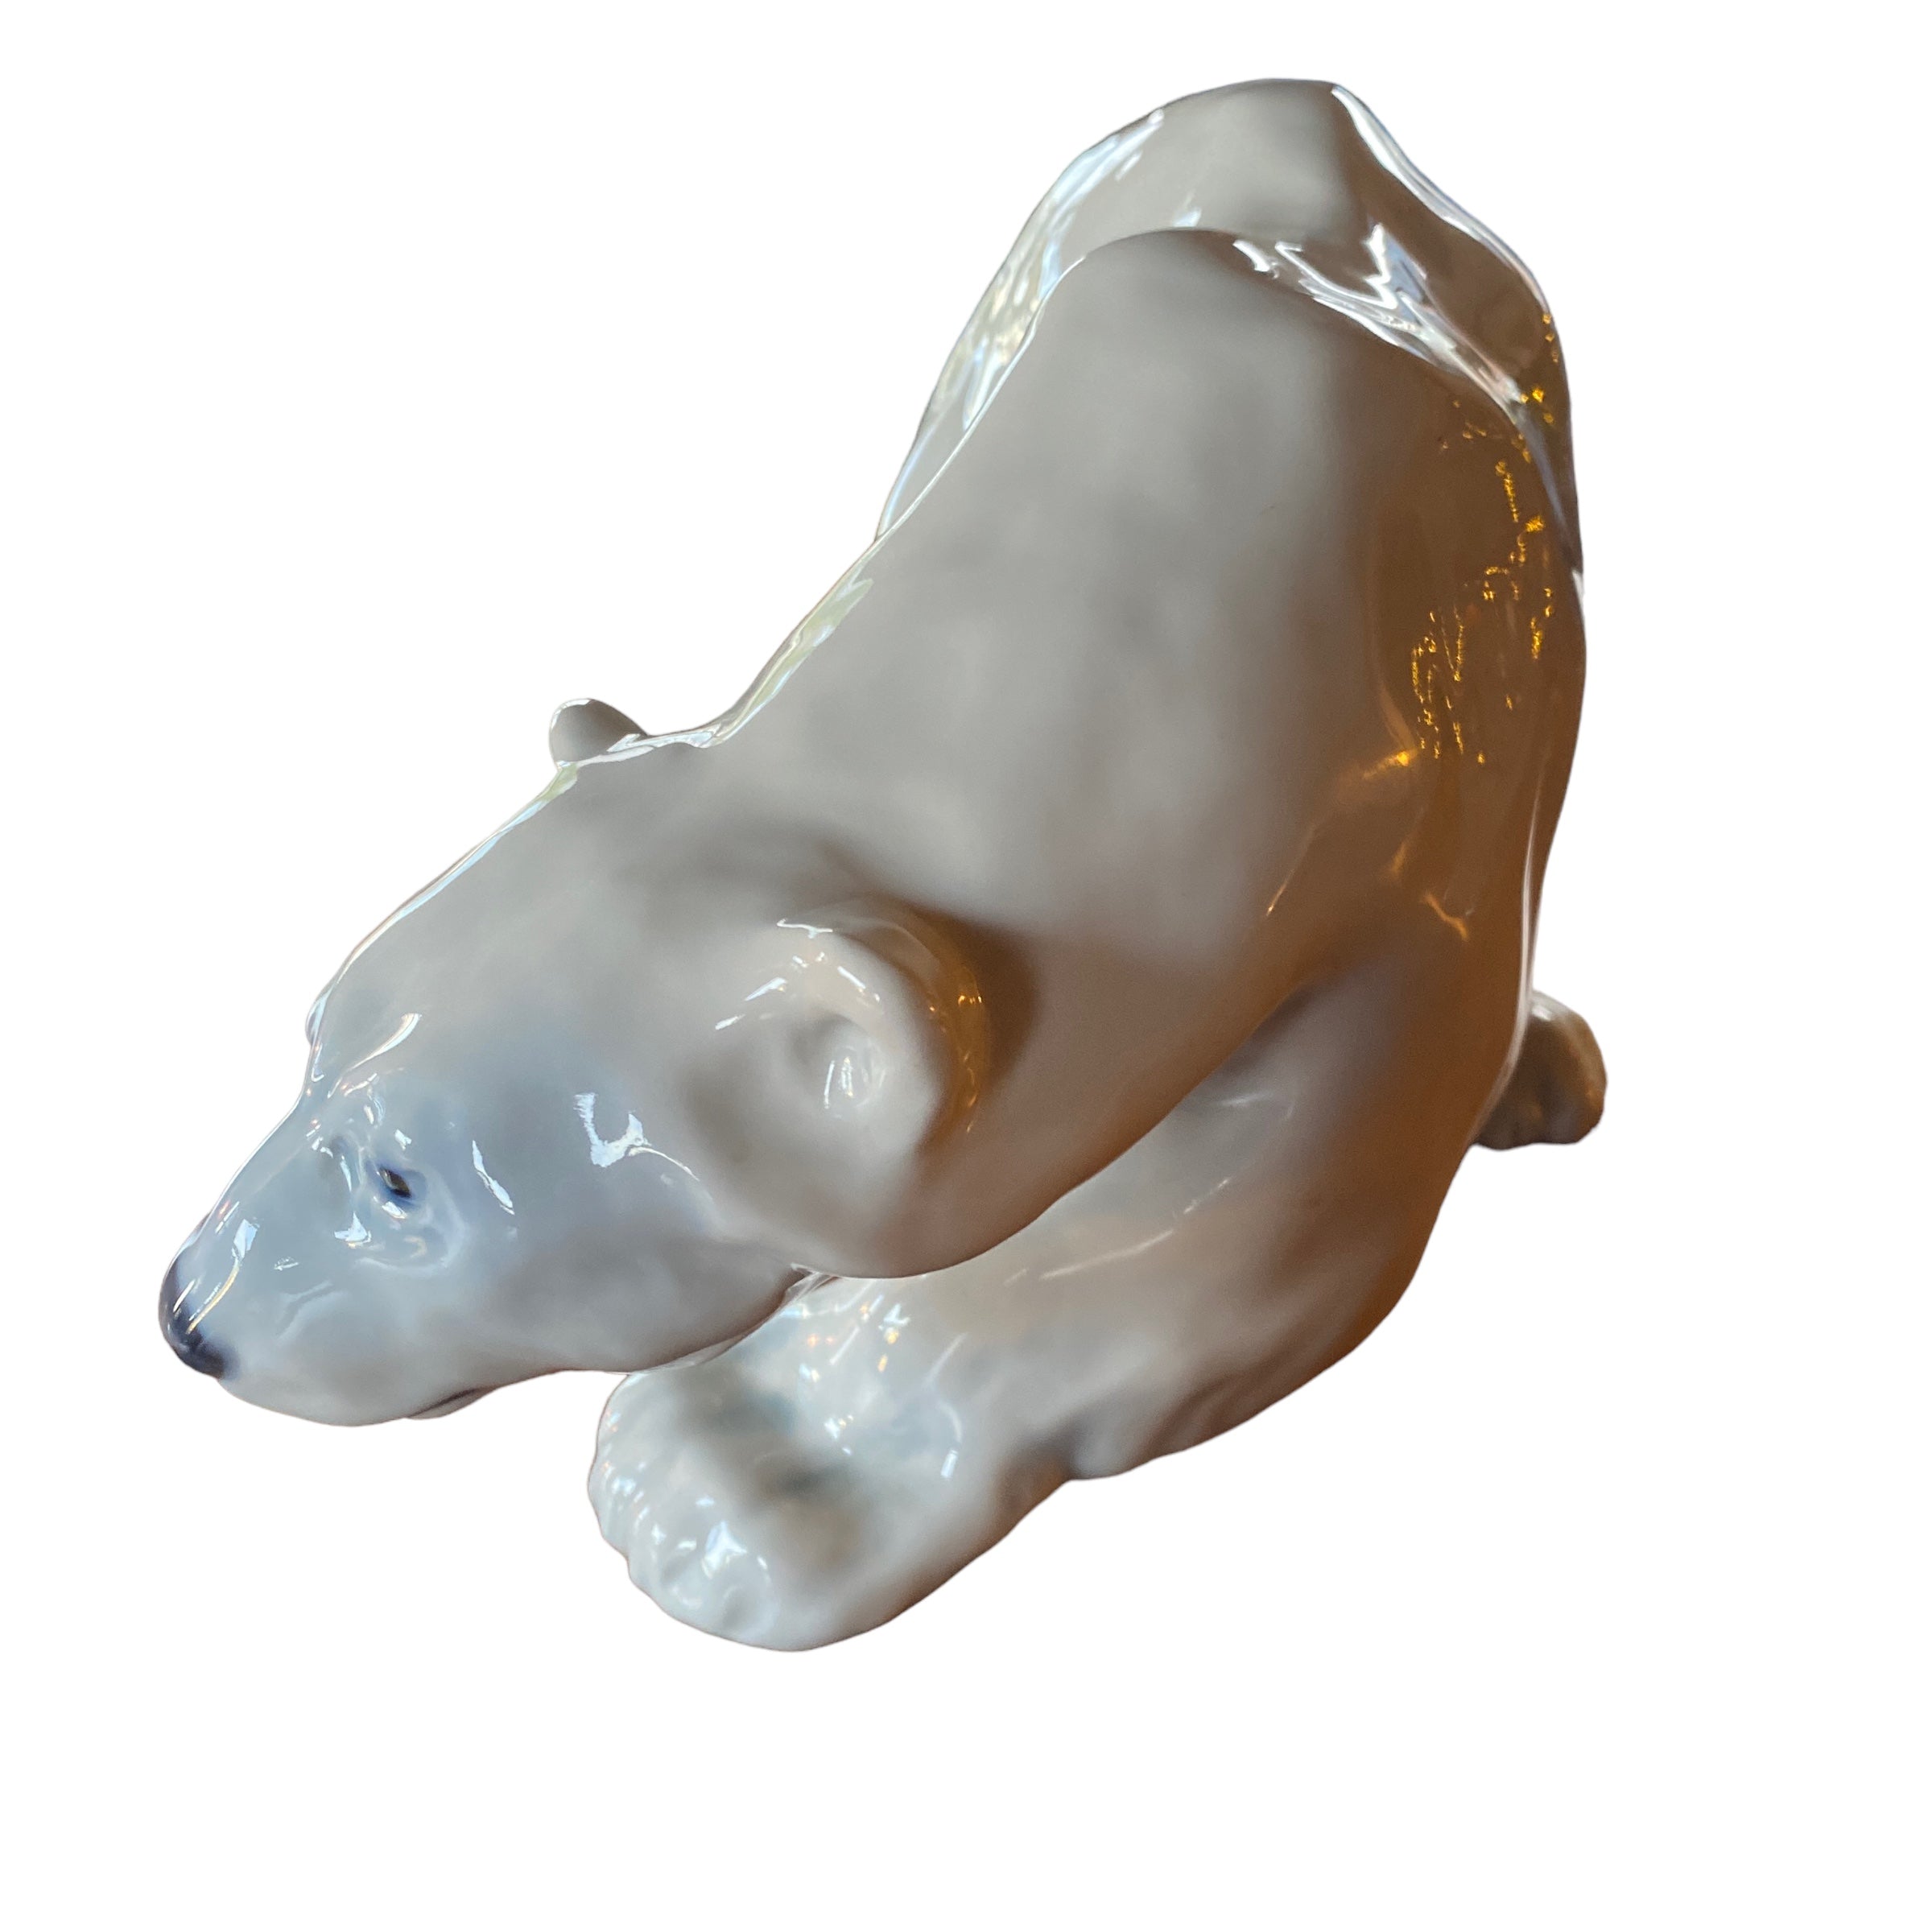 Ears Of Polar Bear On The Prowl Royal Copenhagen figurine 1137